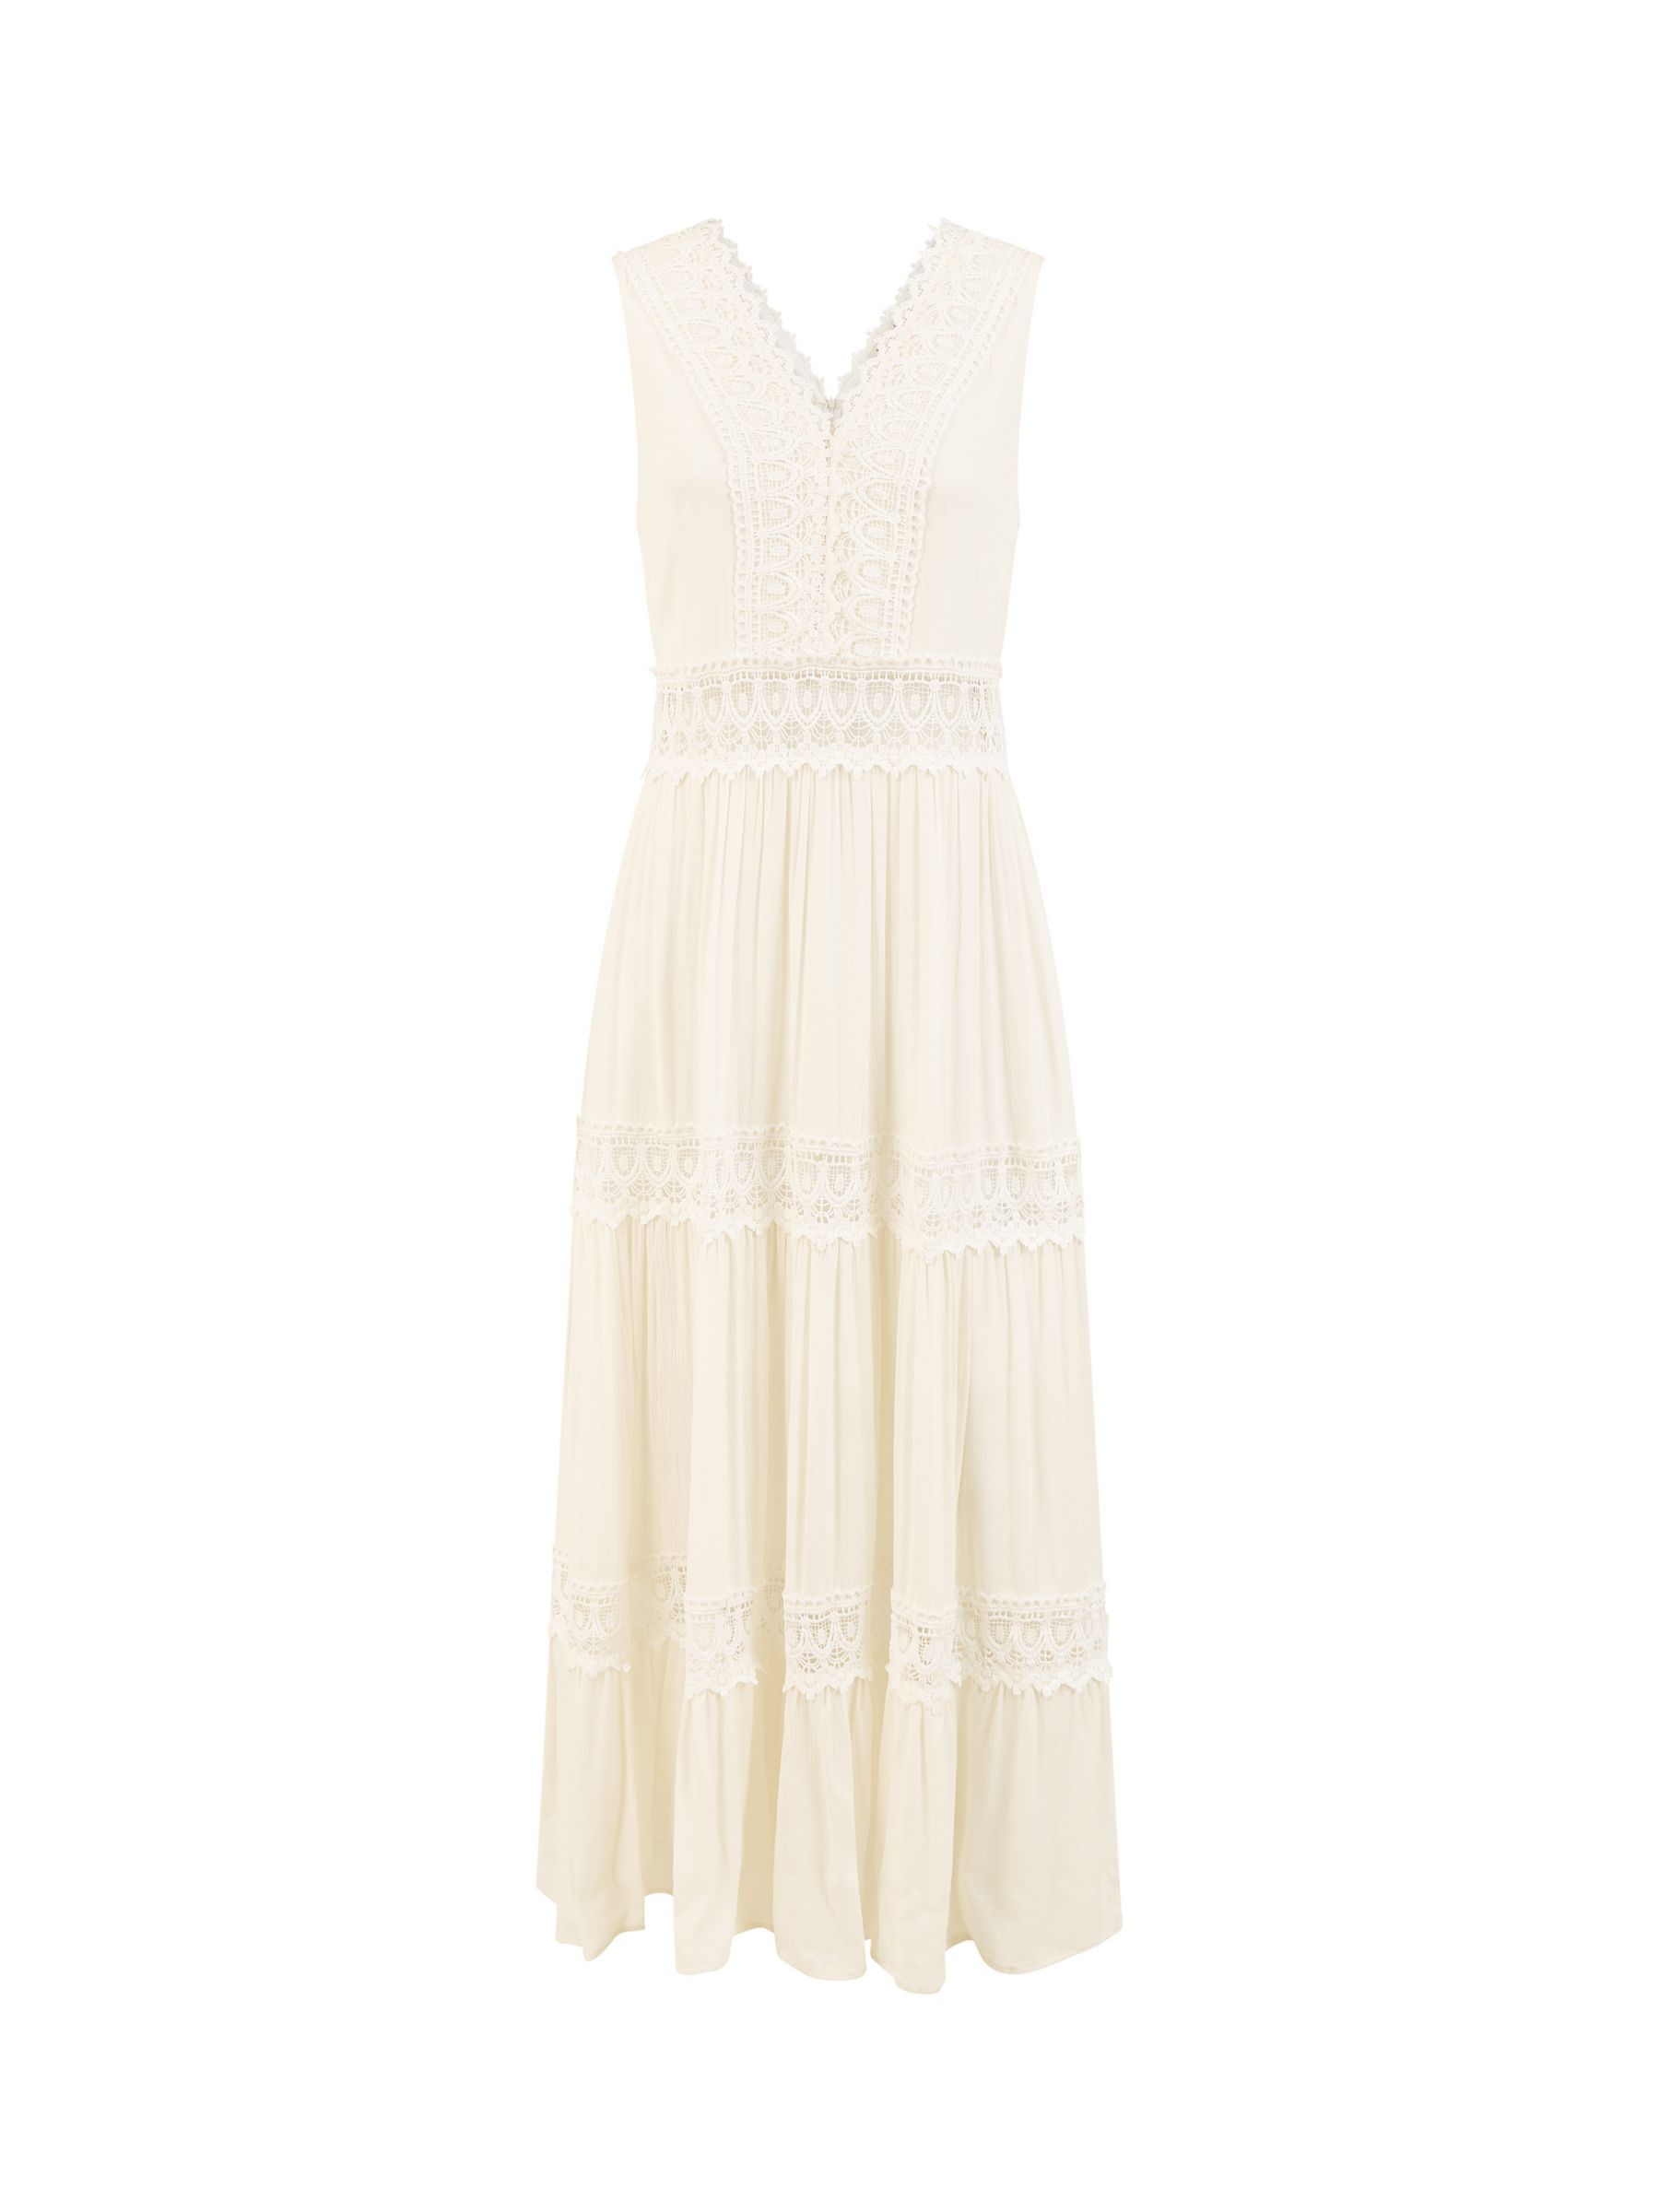 Yumi Lace Trim Cotton Maxi Sundress, White, S